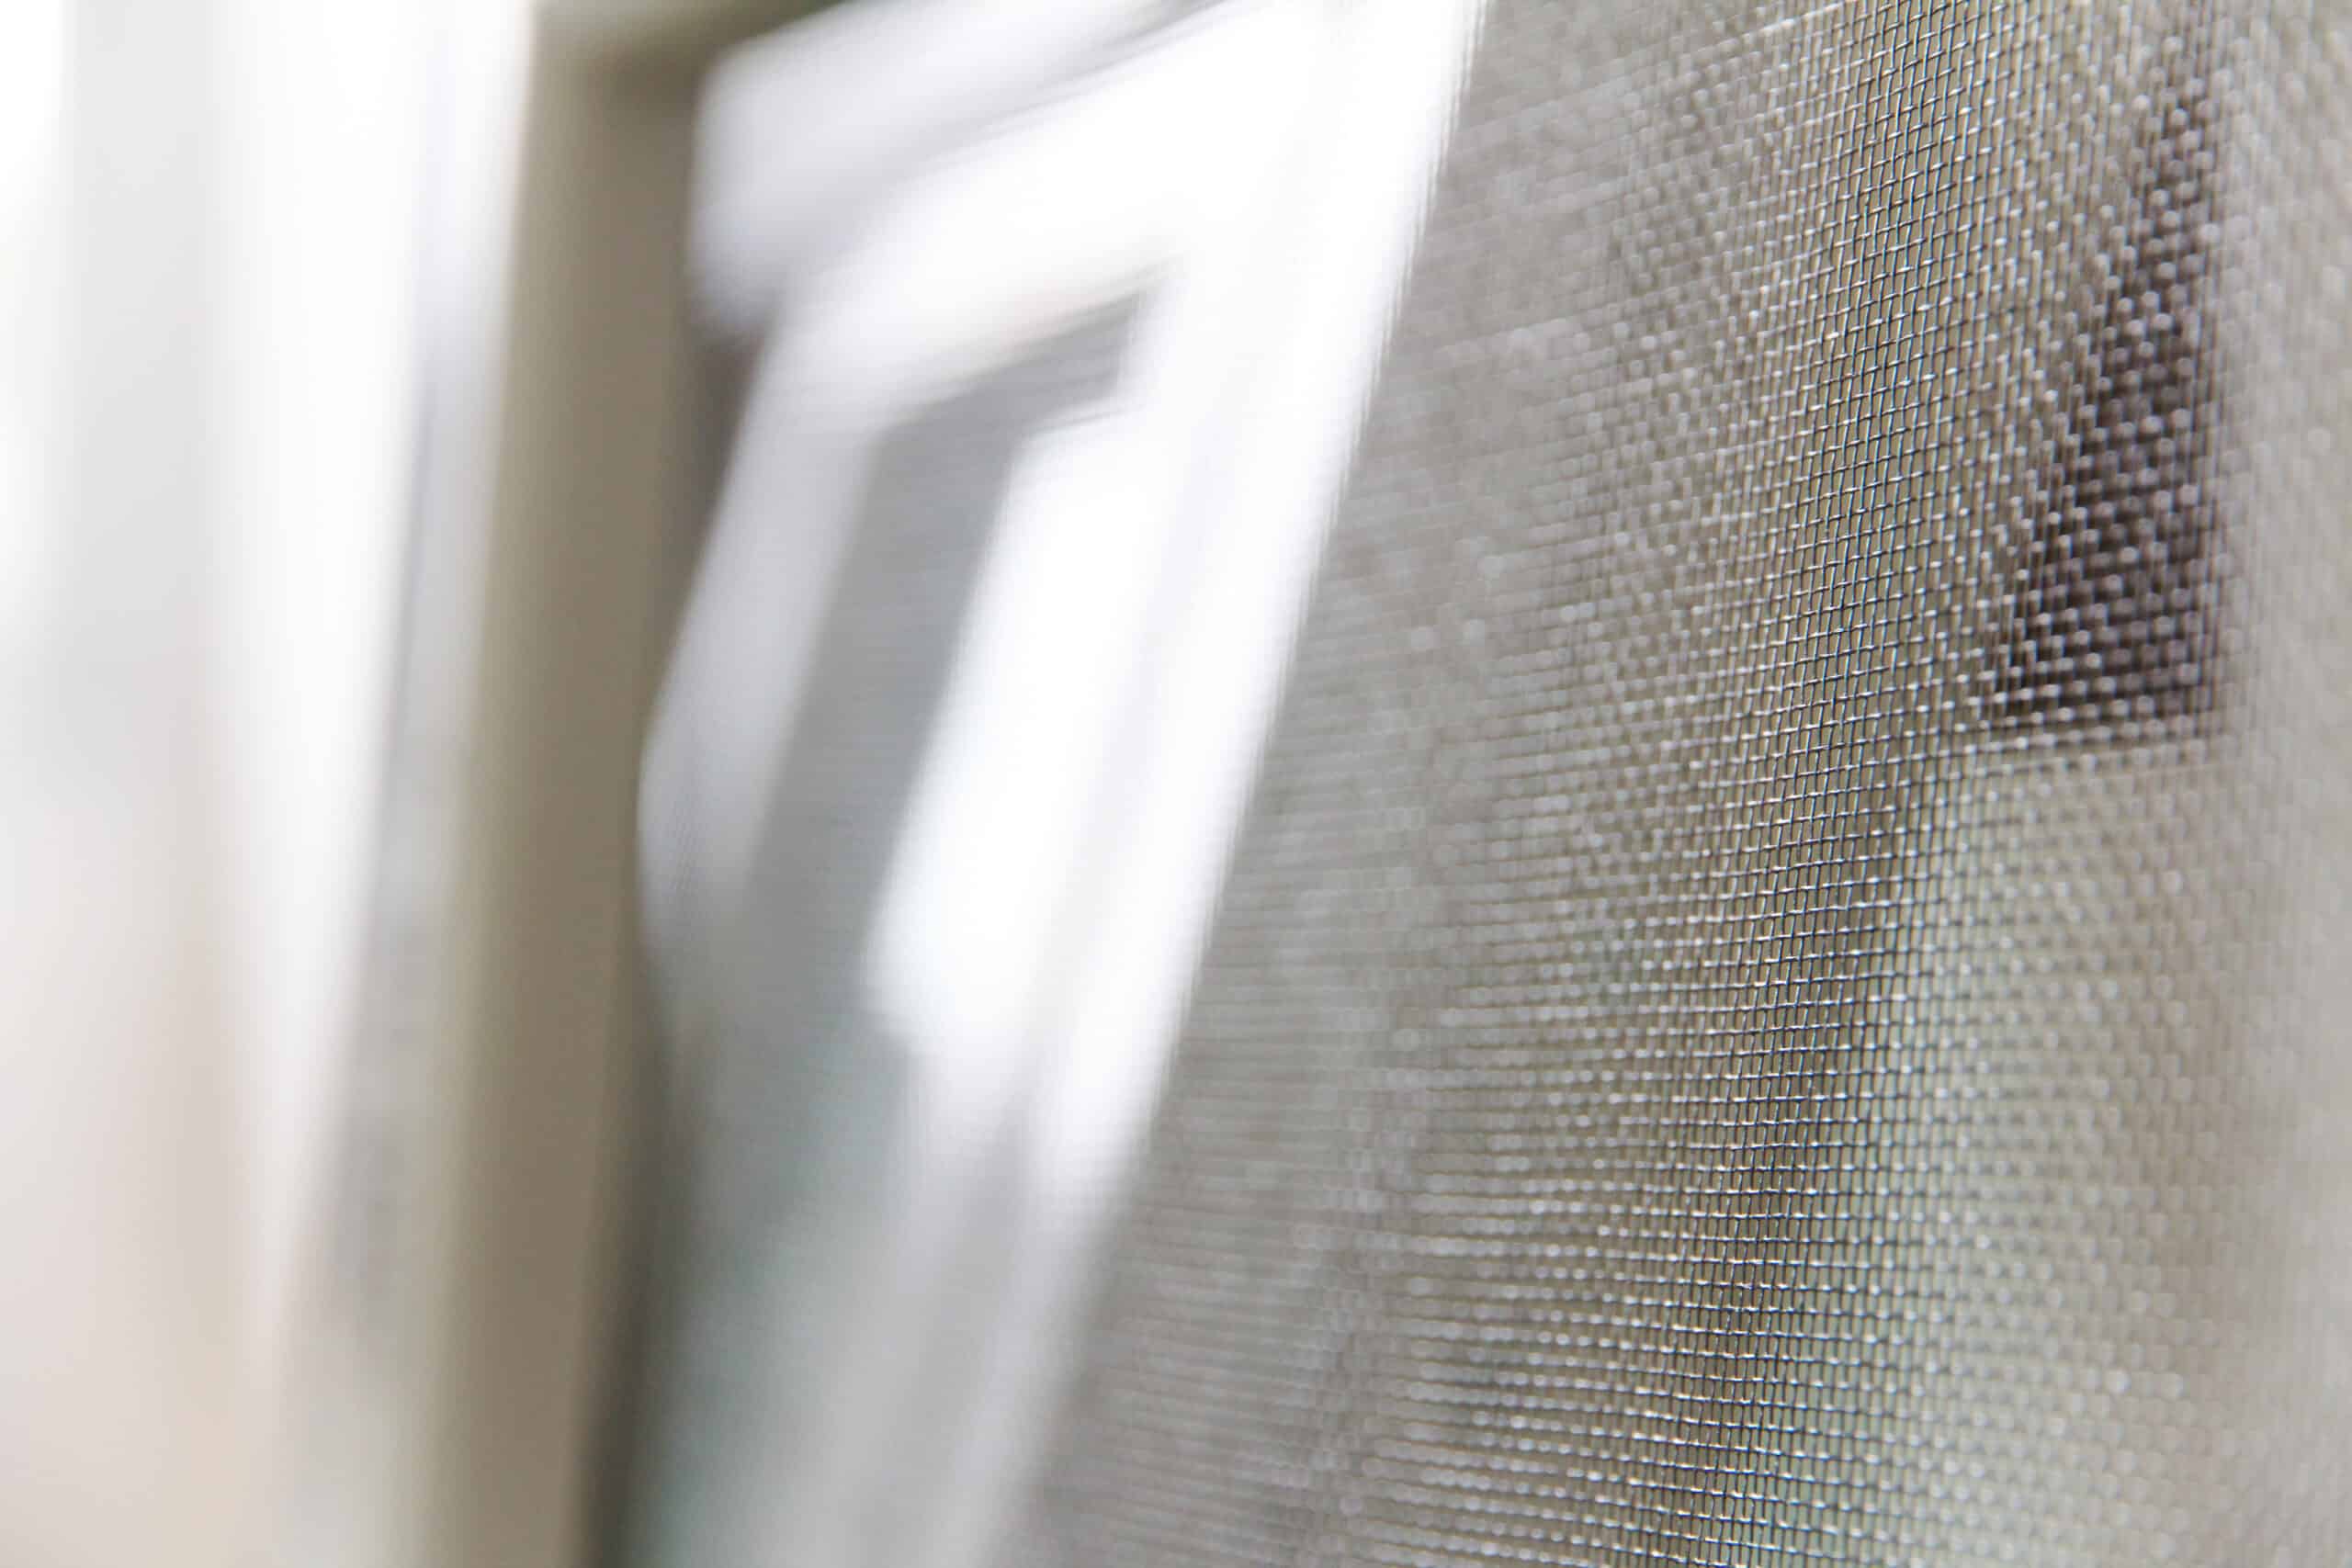 close-up-of-mosquito-net-and-window-background-2023-11-27-05-34-49-utc